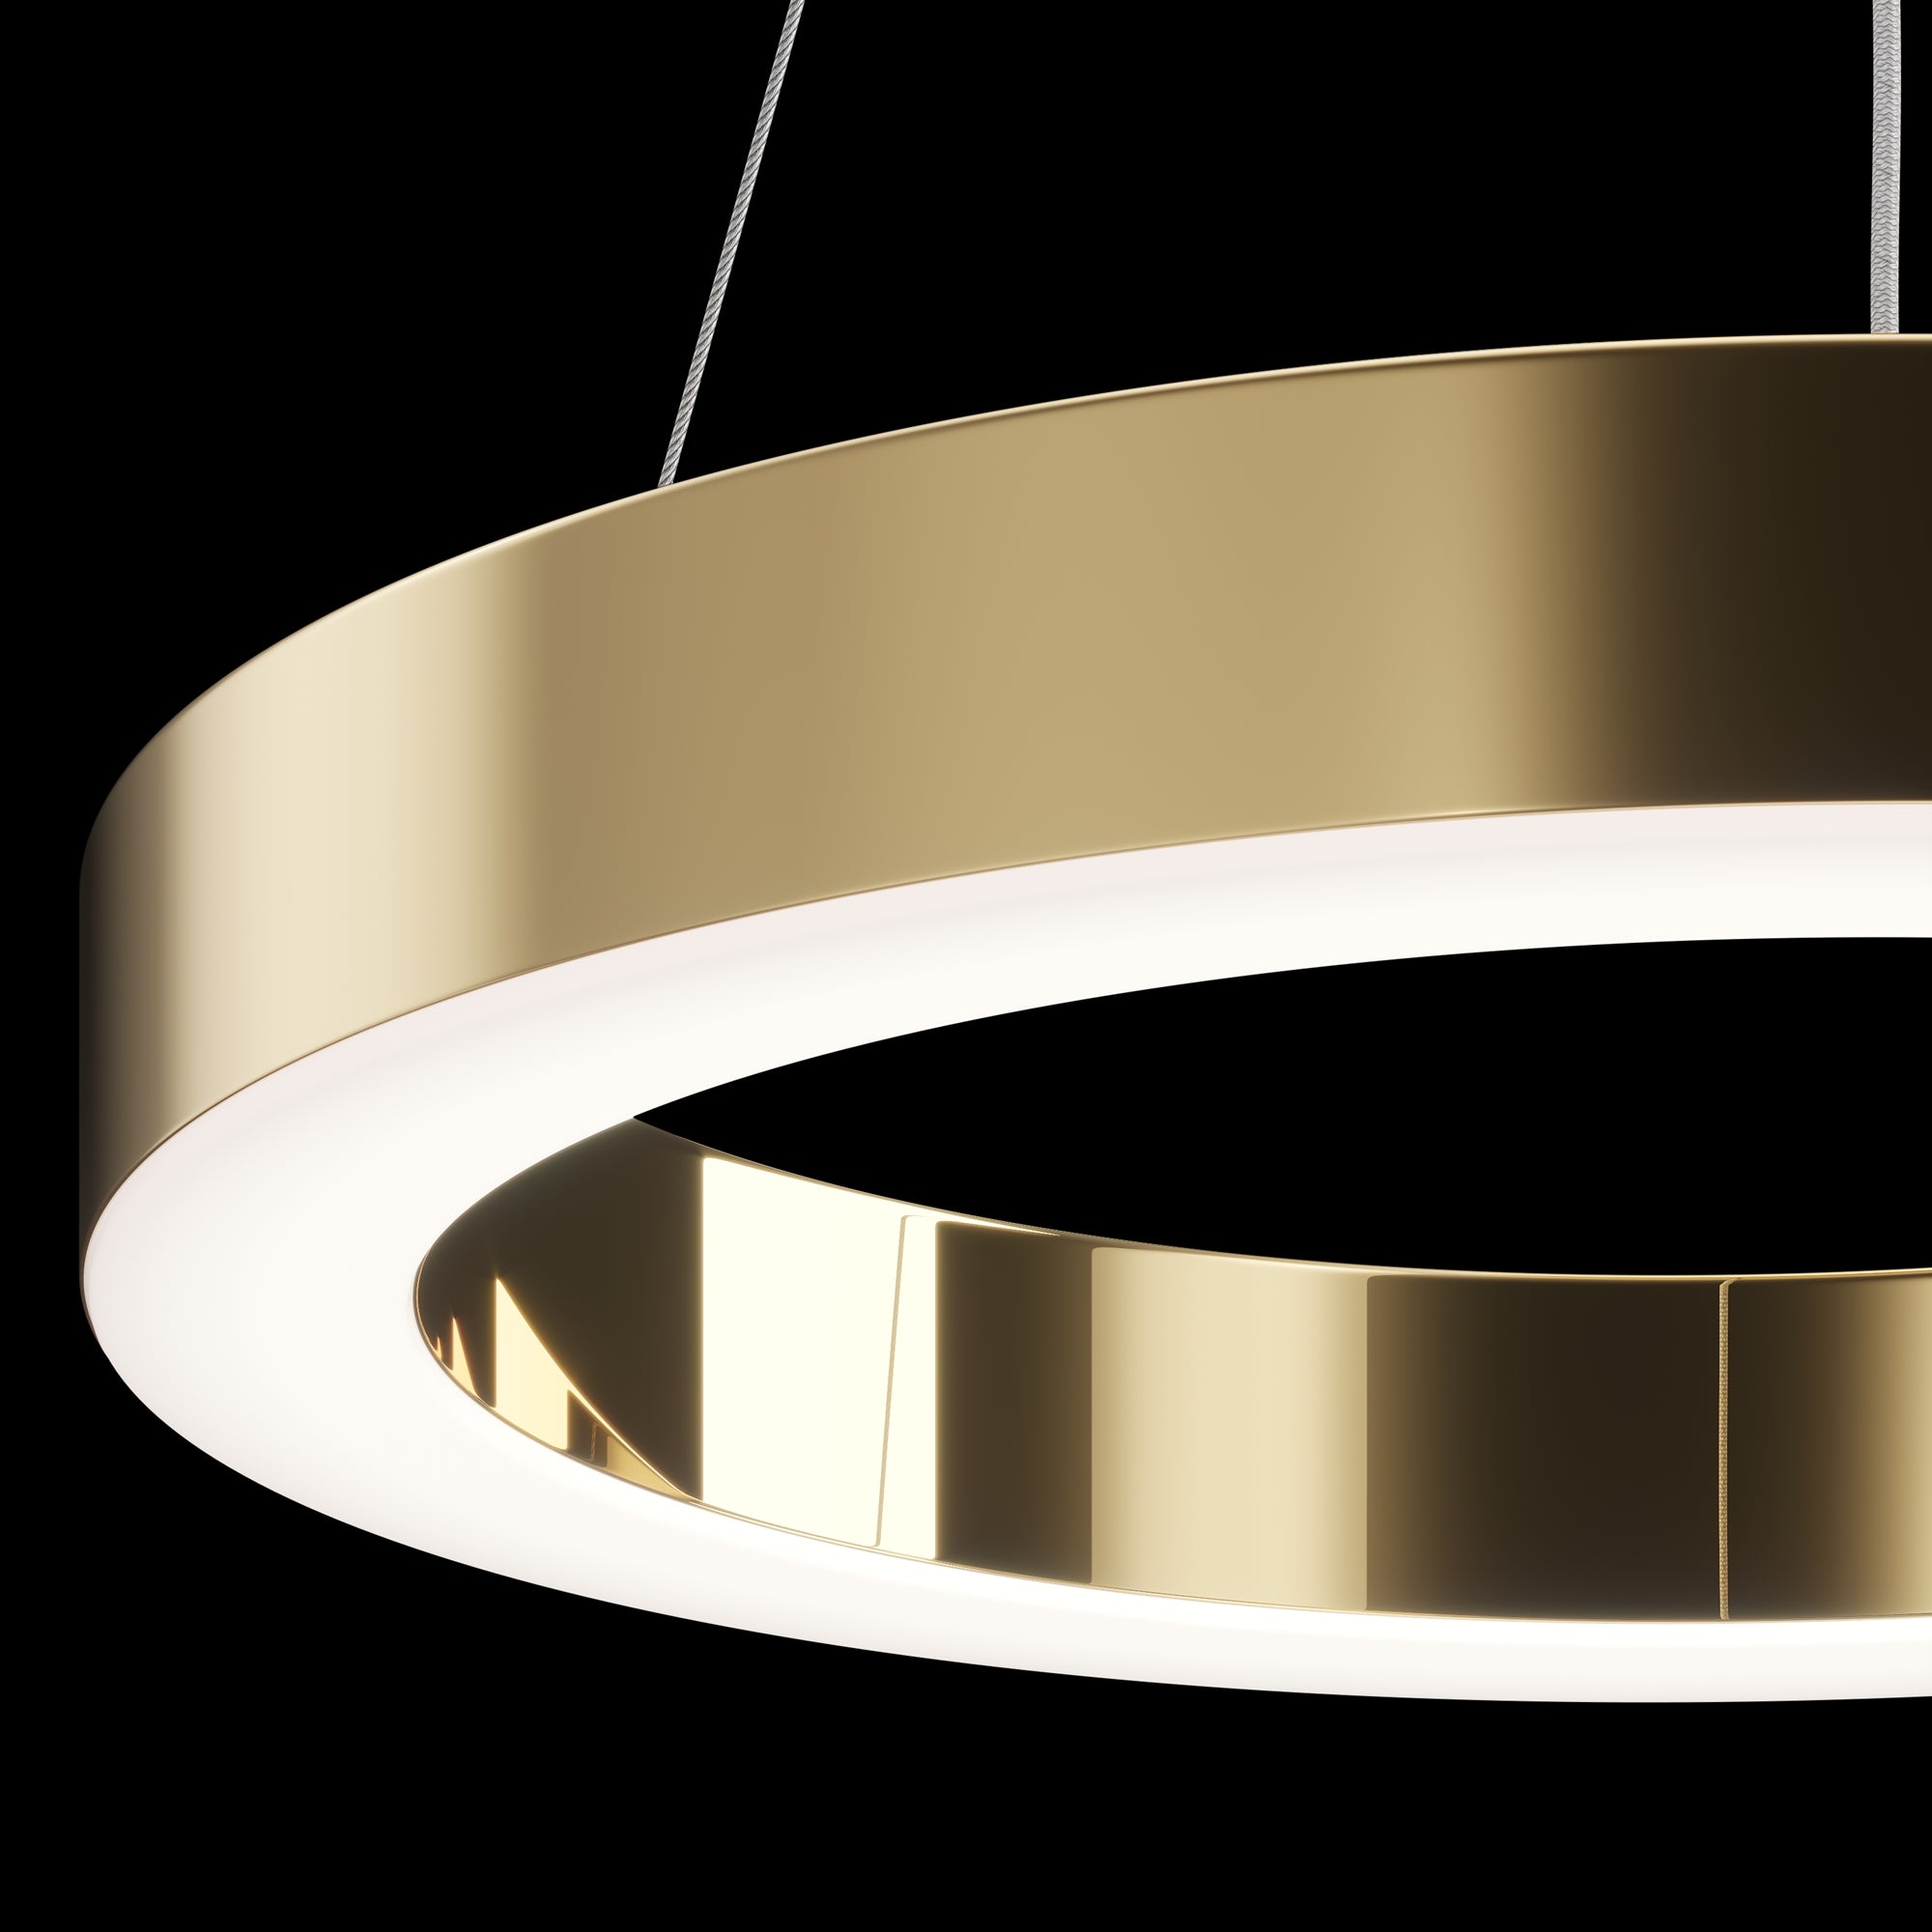 Saturno Small/Medium/Large LED Hanging Light - Brass Finish